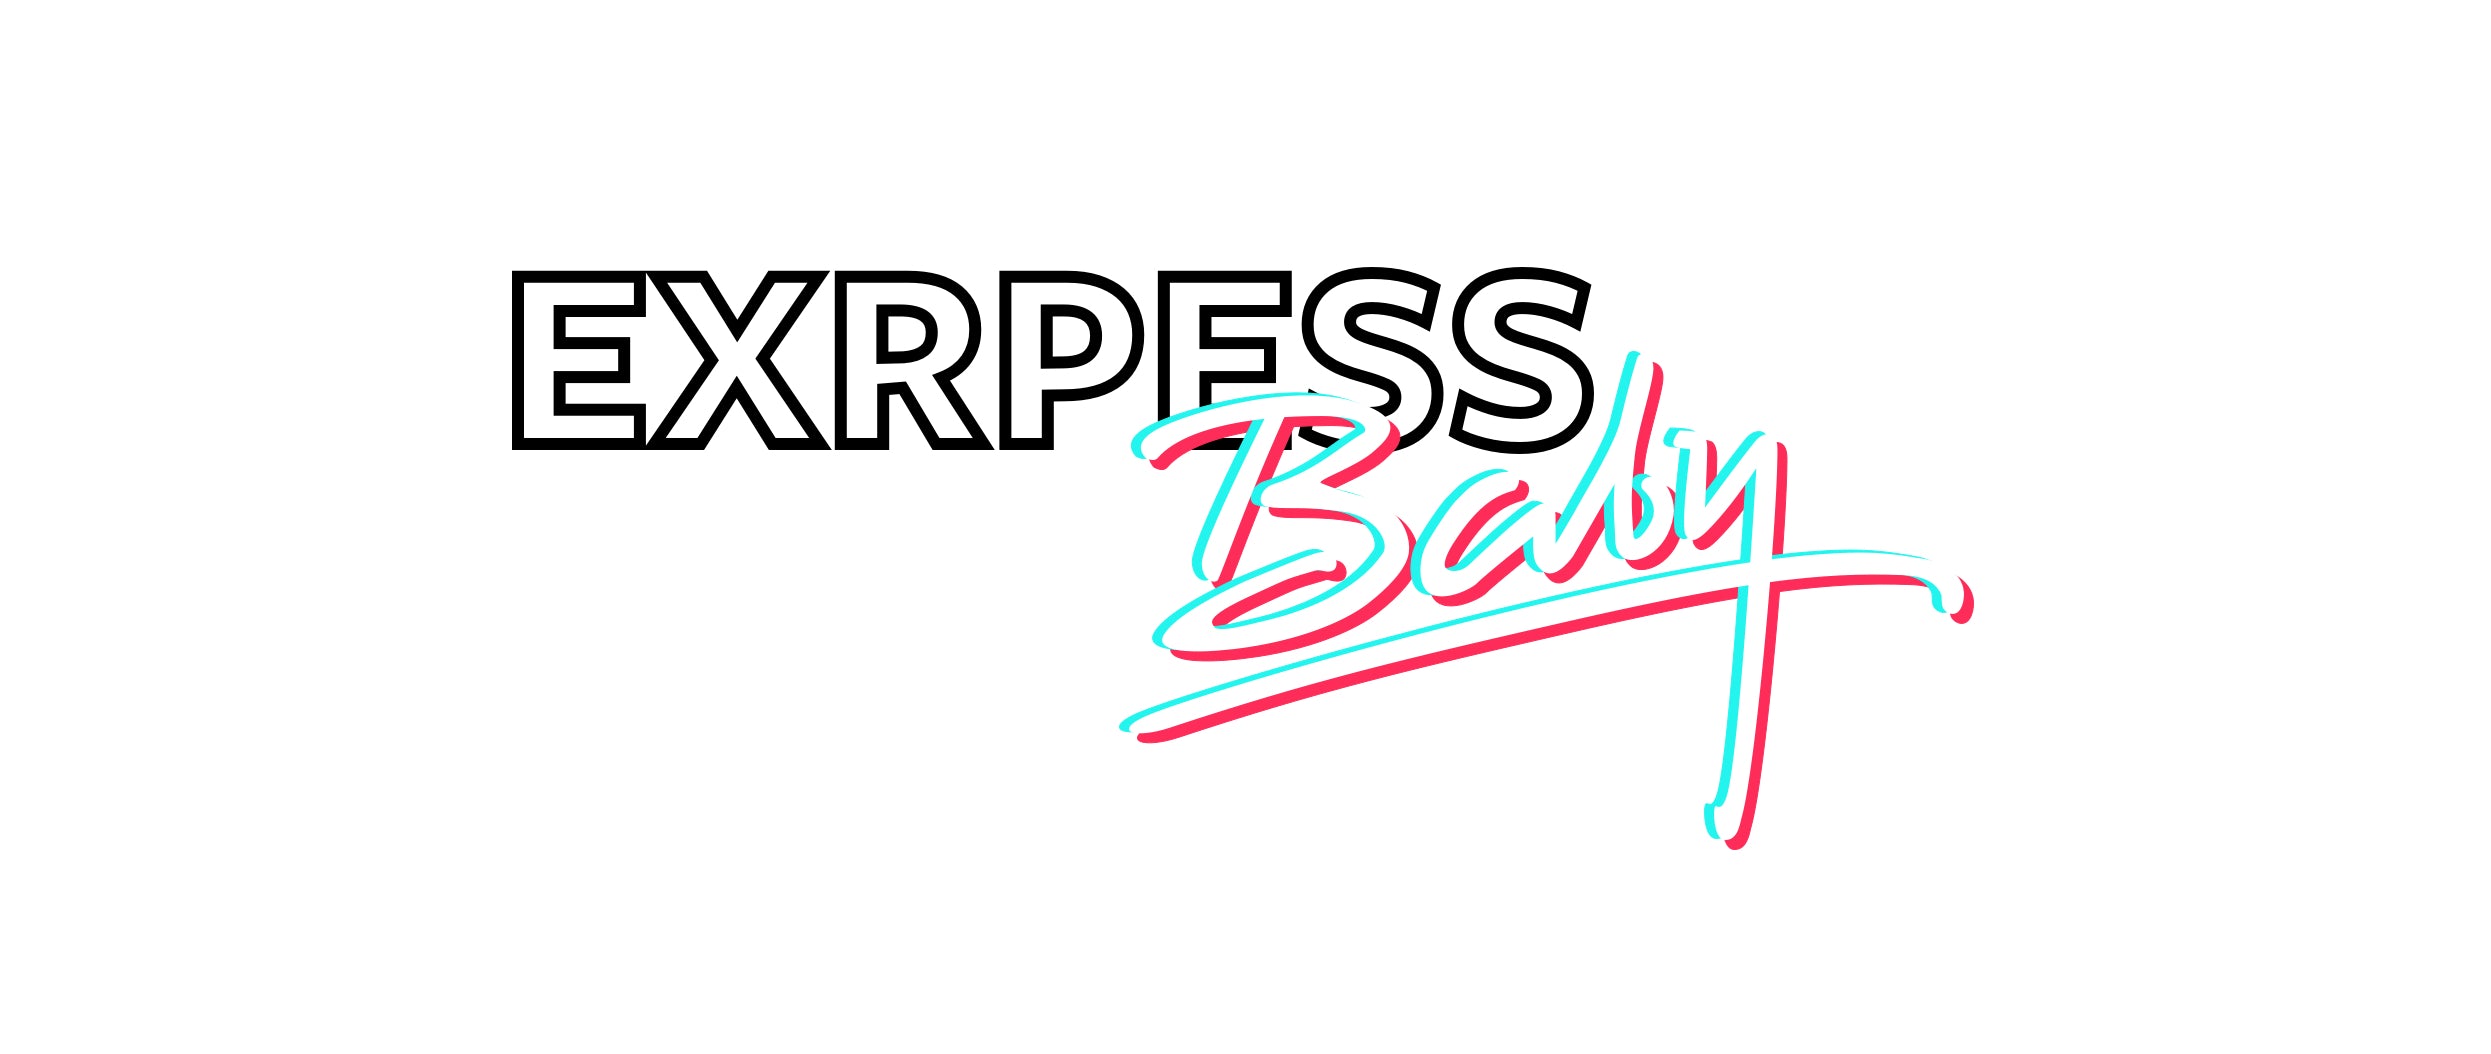 Express Baby